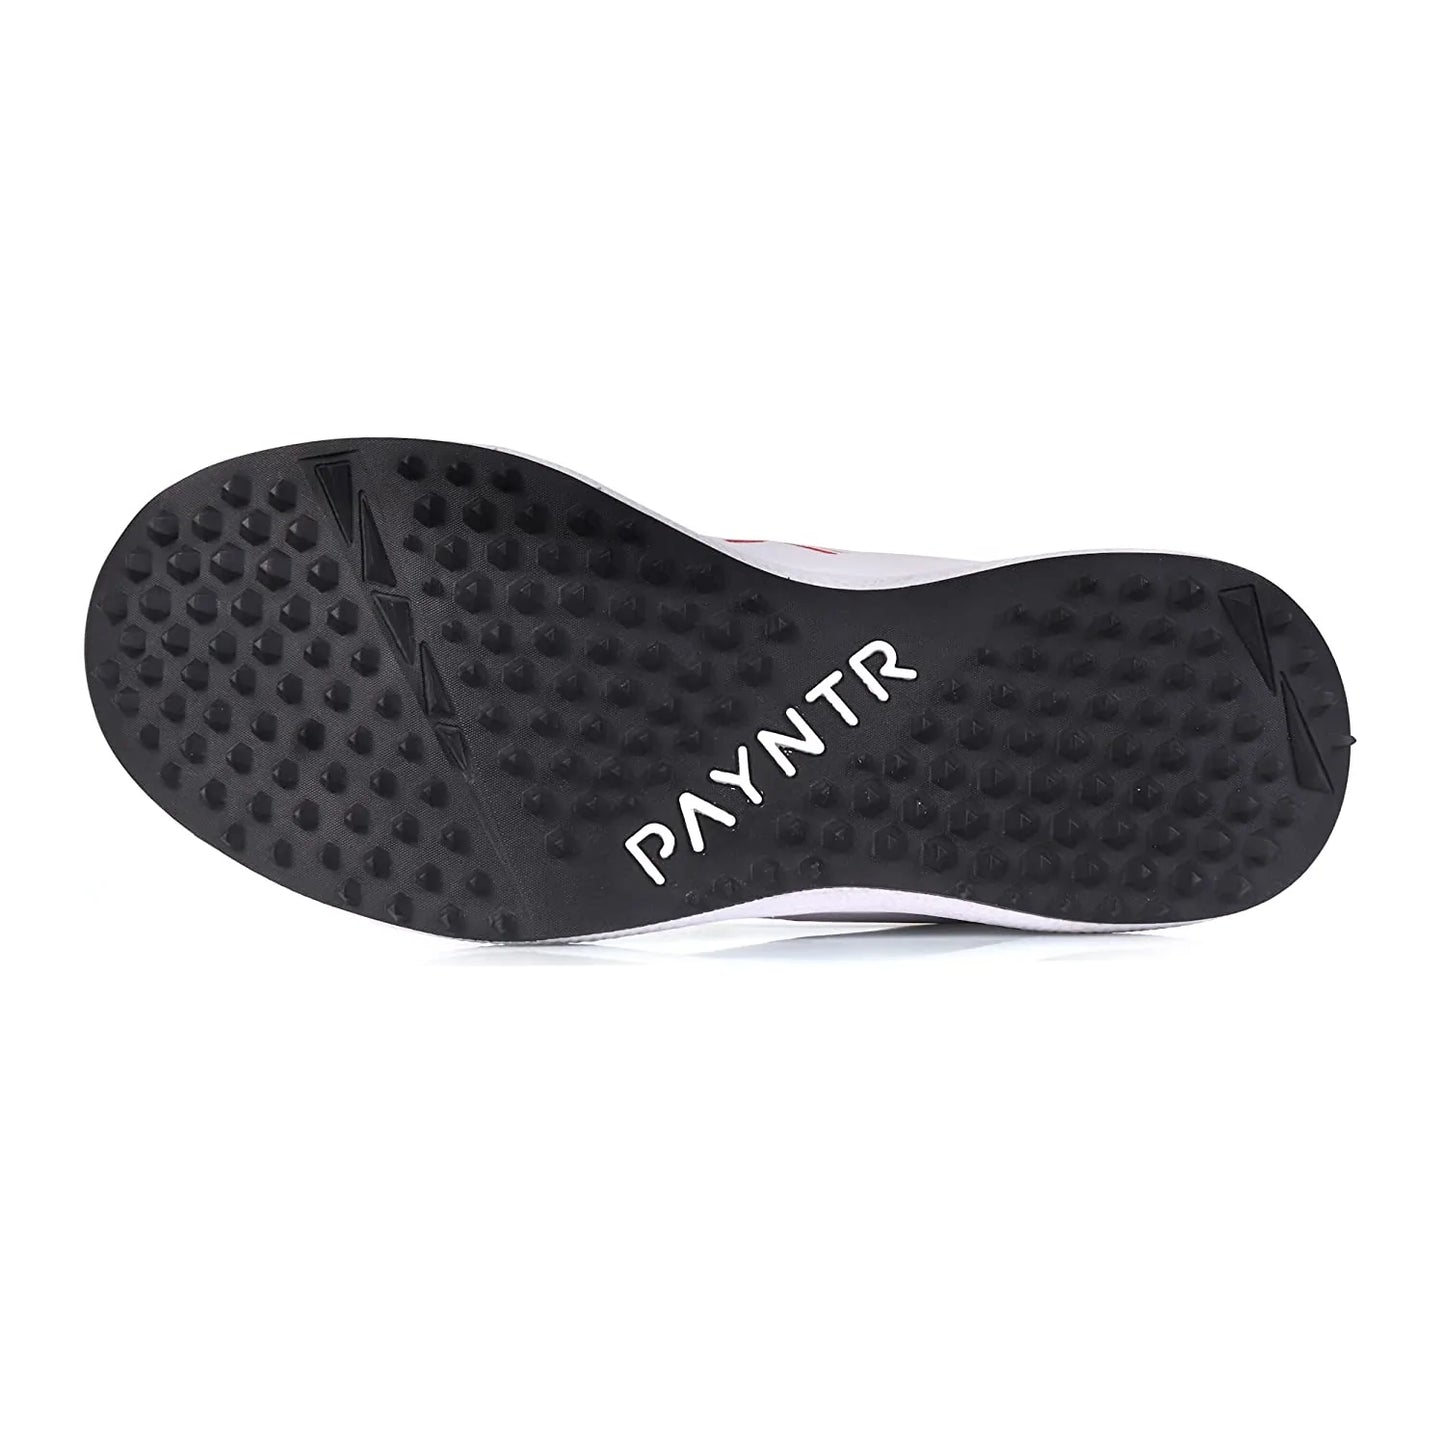 Payntr X Batting Rubber Studs (Black& White) Cricket Shoes